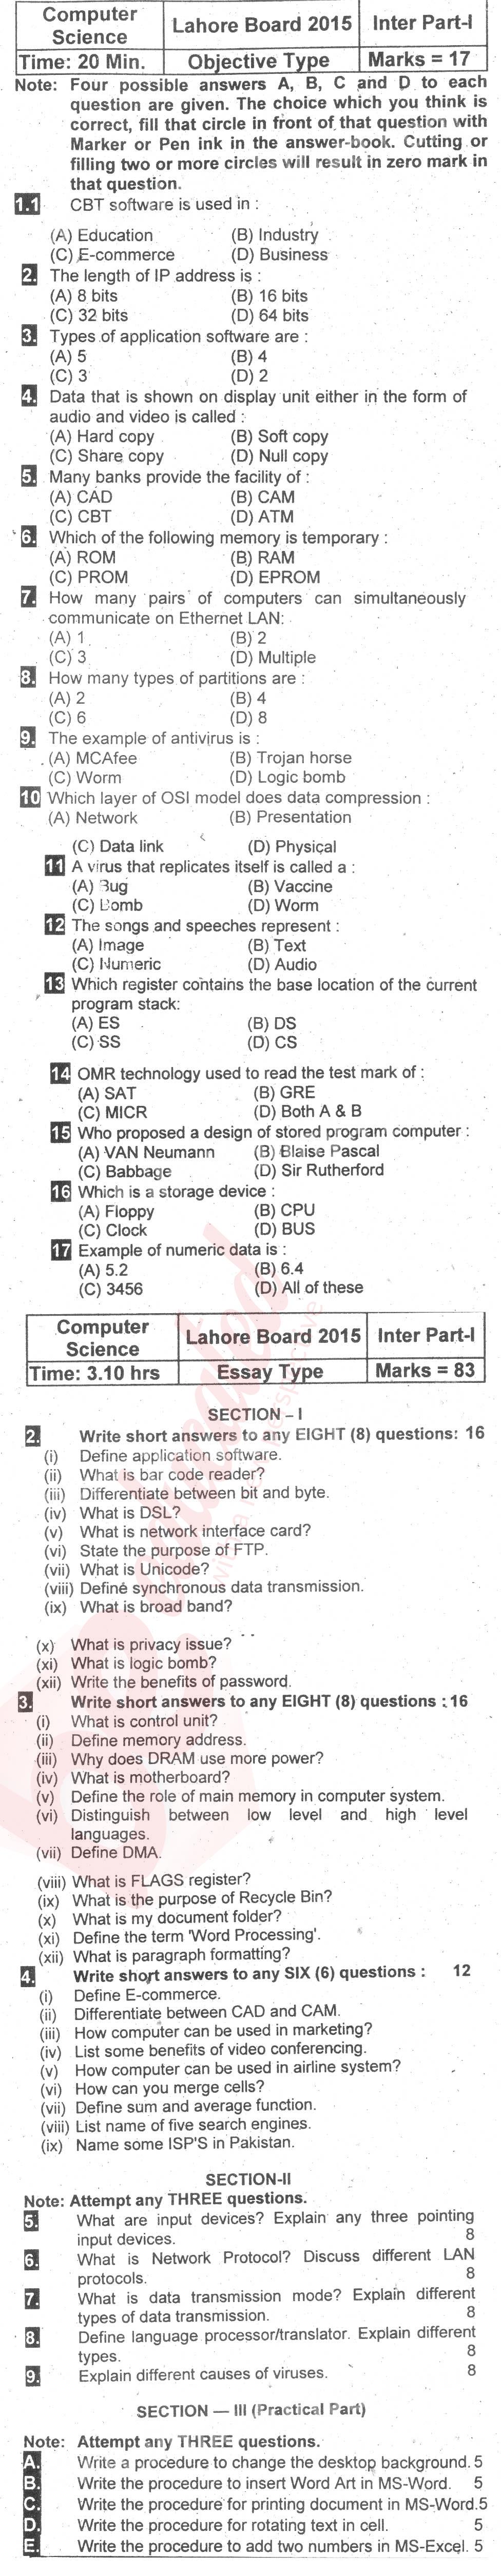 Computer Science ICS Part 1 Past Paper Group 1 BISE Lahore 2015